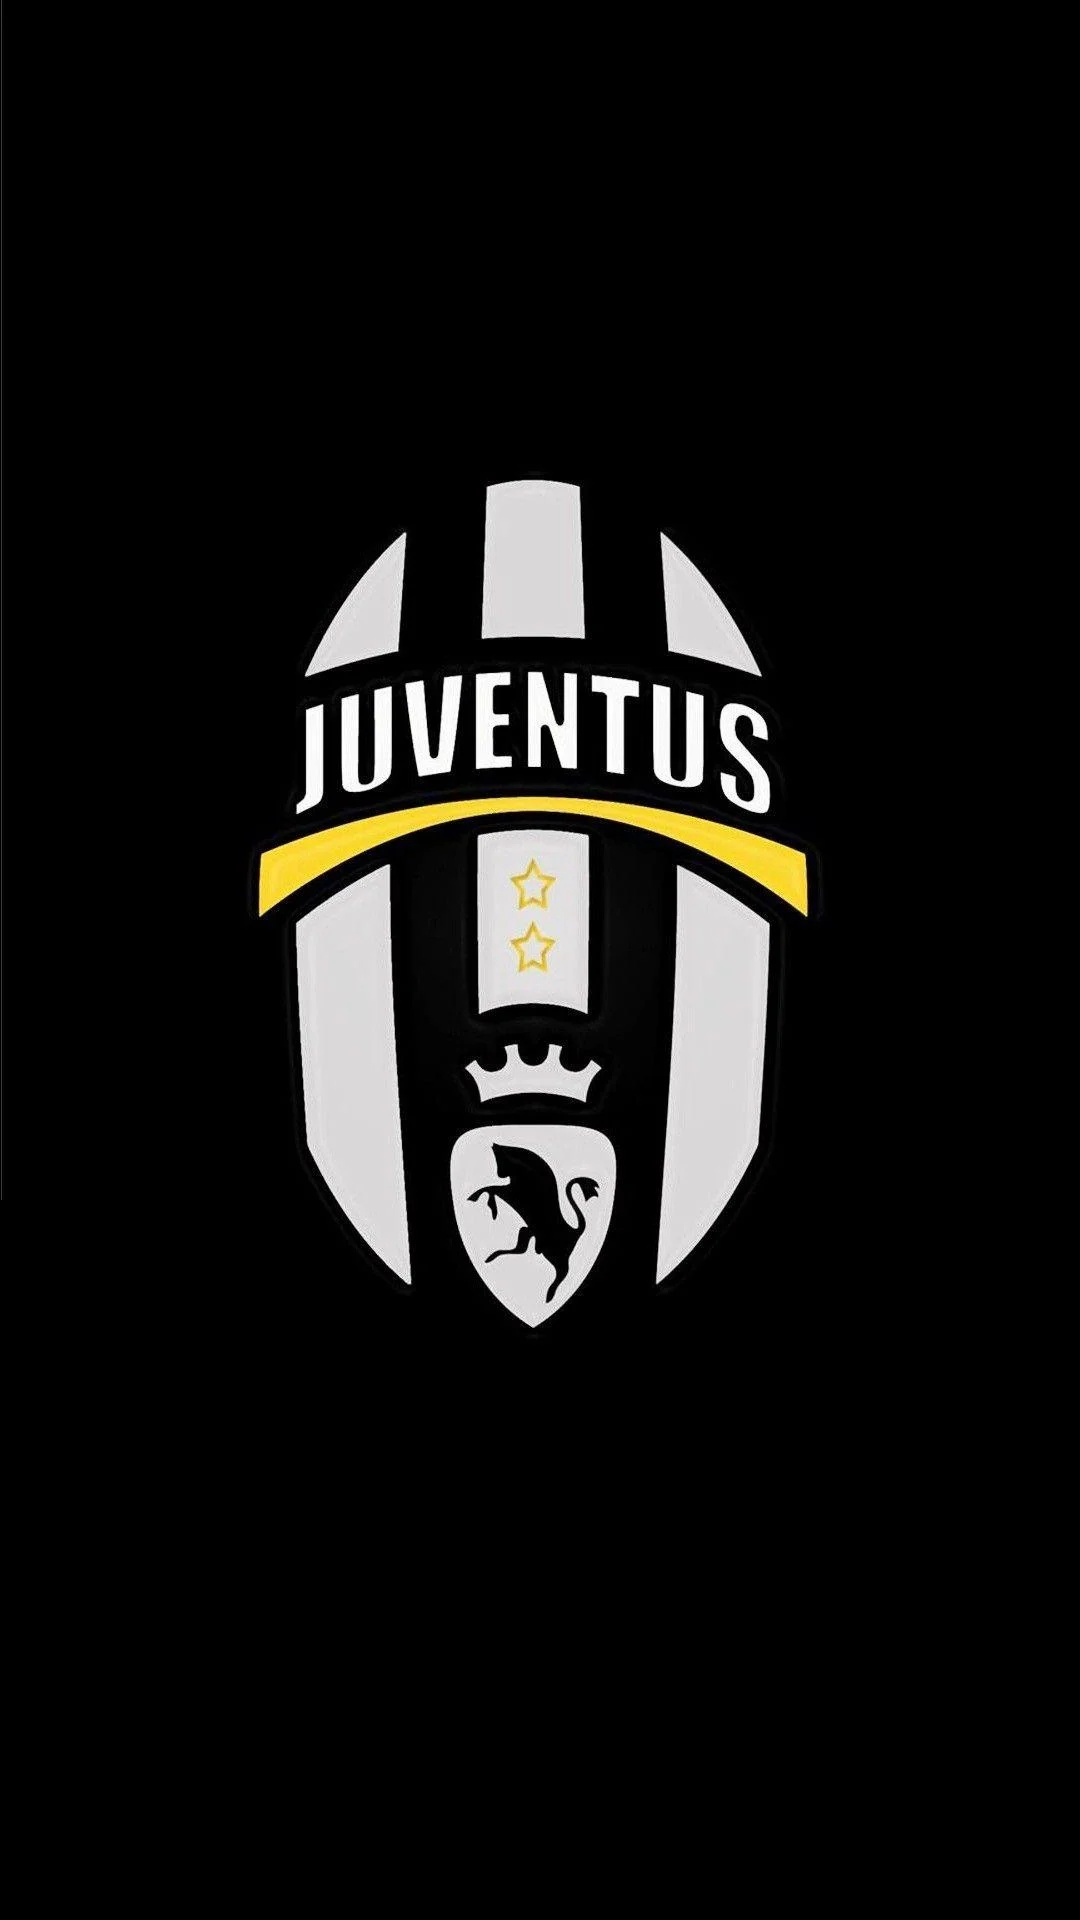 Juventus: Italian club, Listed on the Borsa Italiana since 2001. 1080x1920 Full HD Wallpaper.